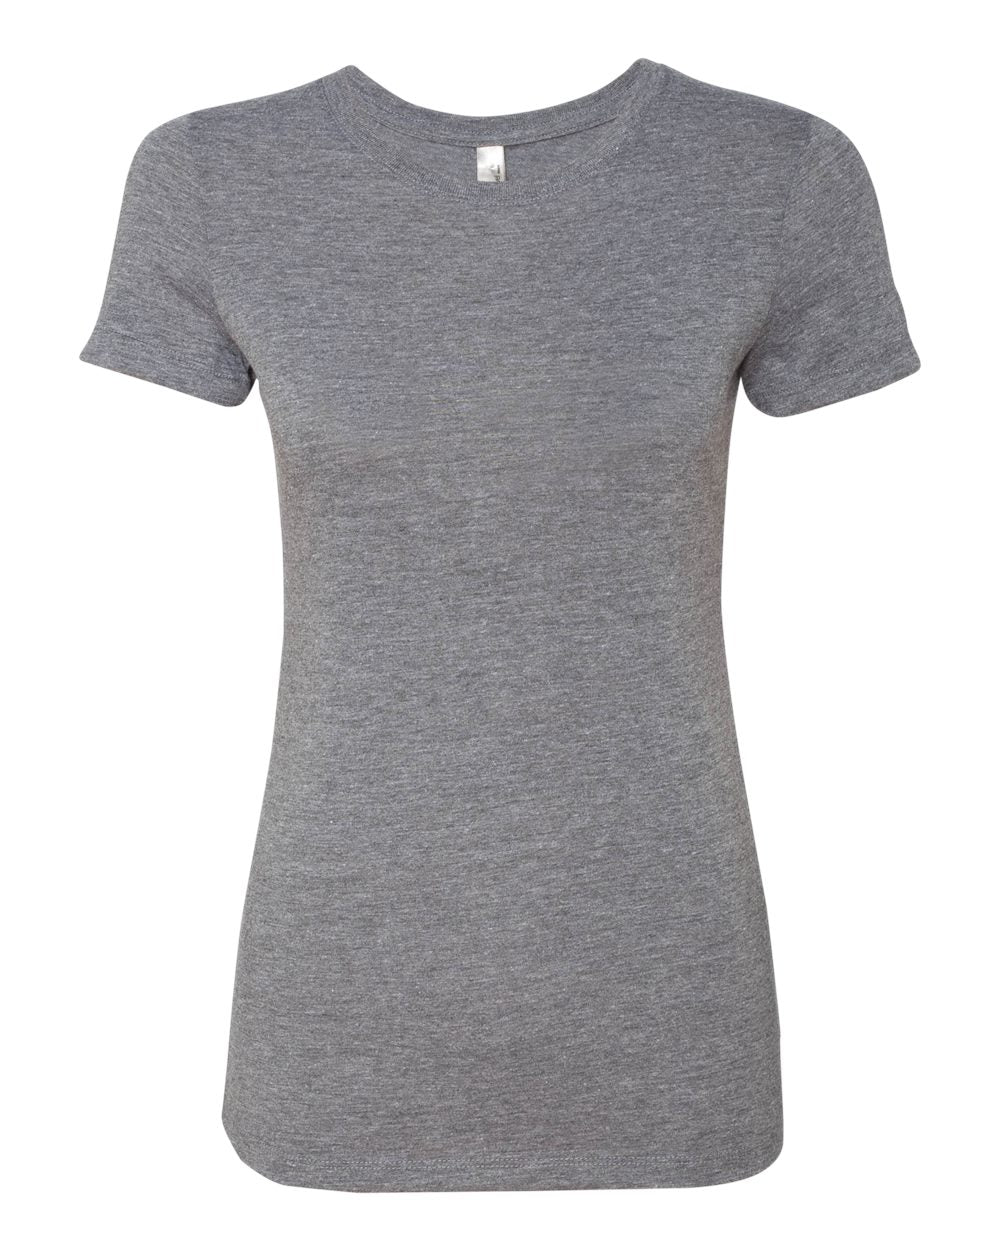 Next Level - Women’s Triblend T-Shirt - 6710 Premium Heather